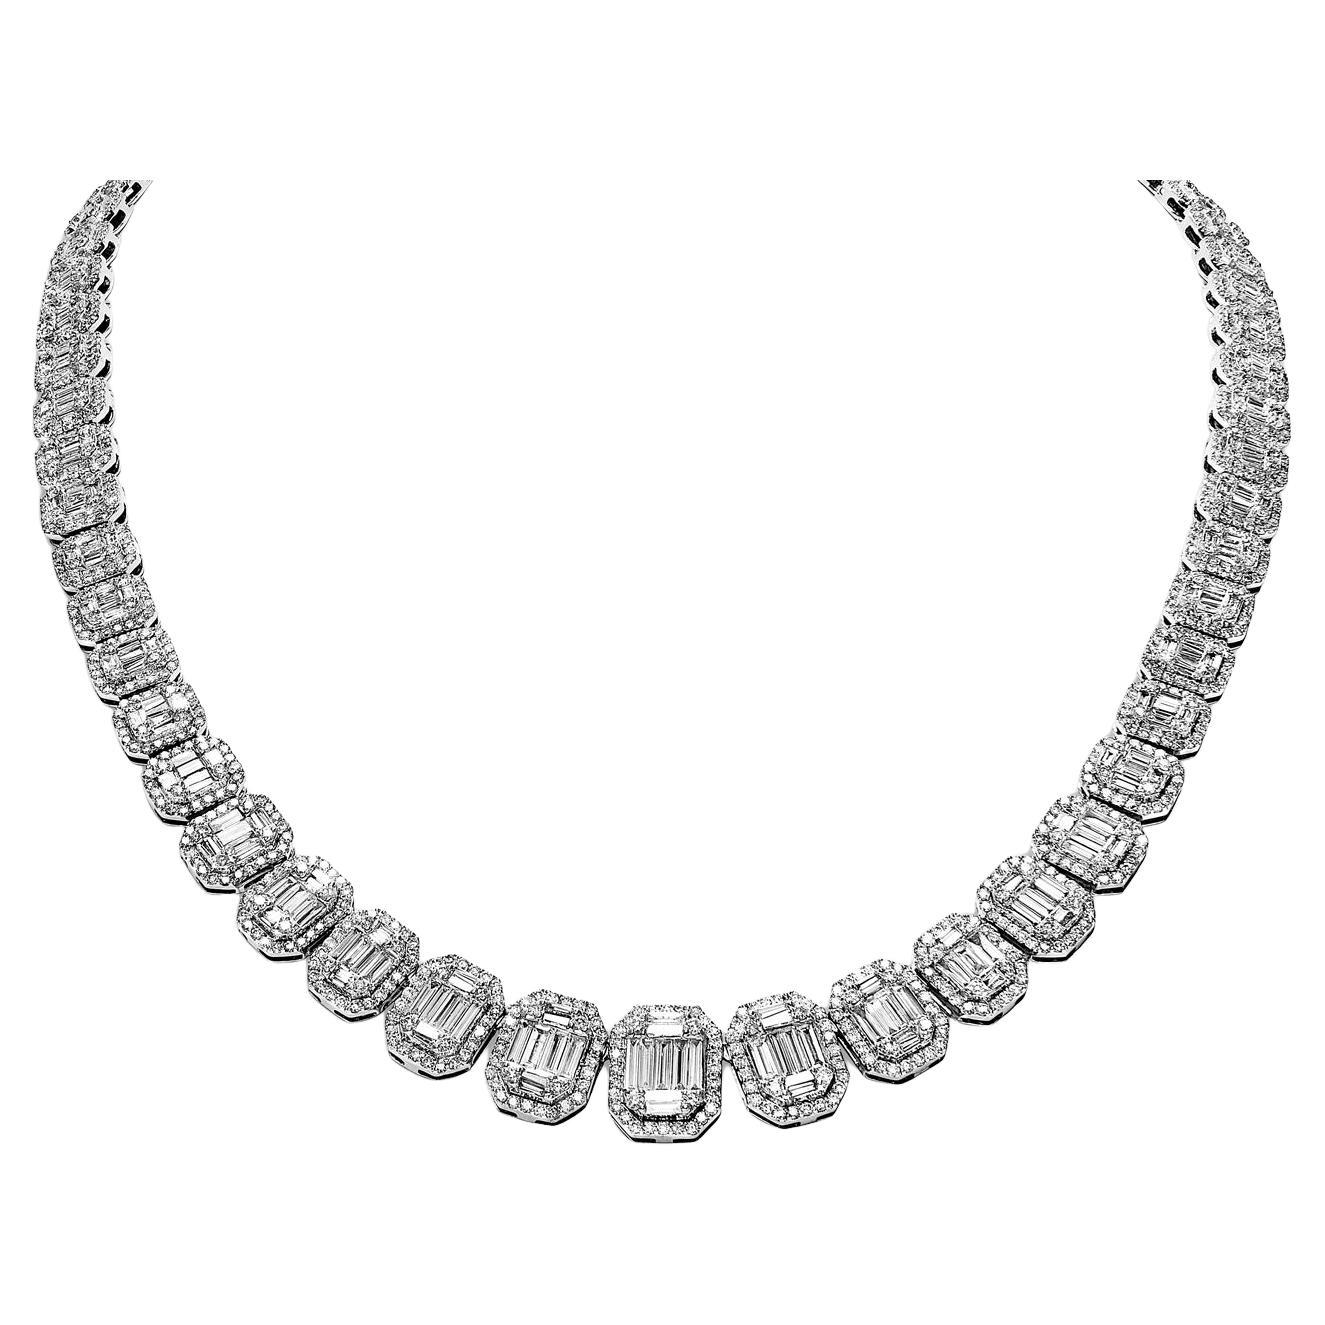 27 Carat Combined Mix Shape Diamond Necklace Certified